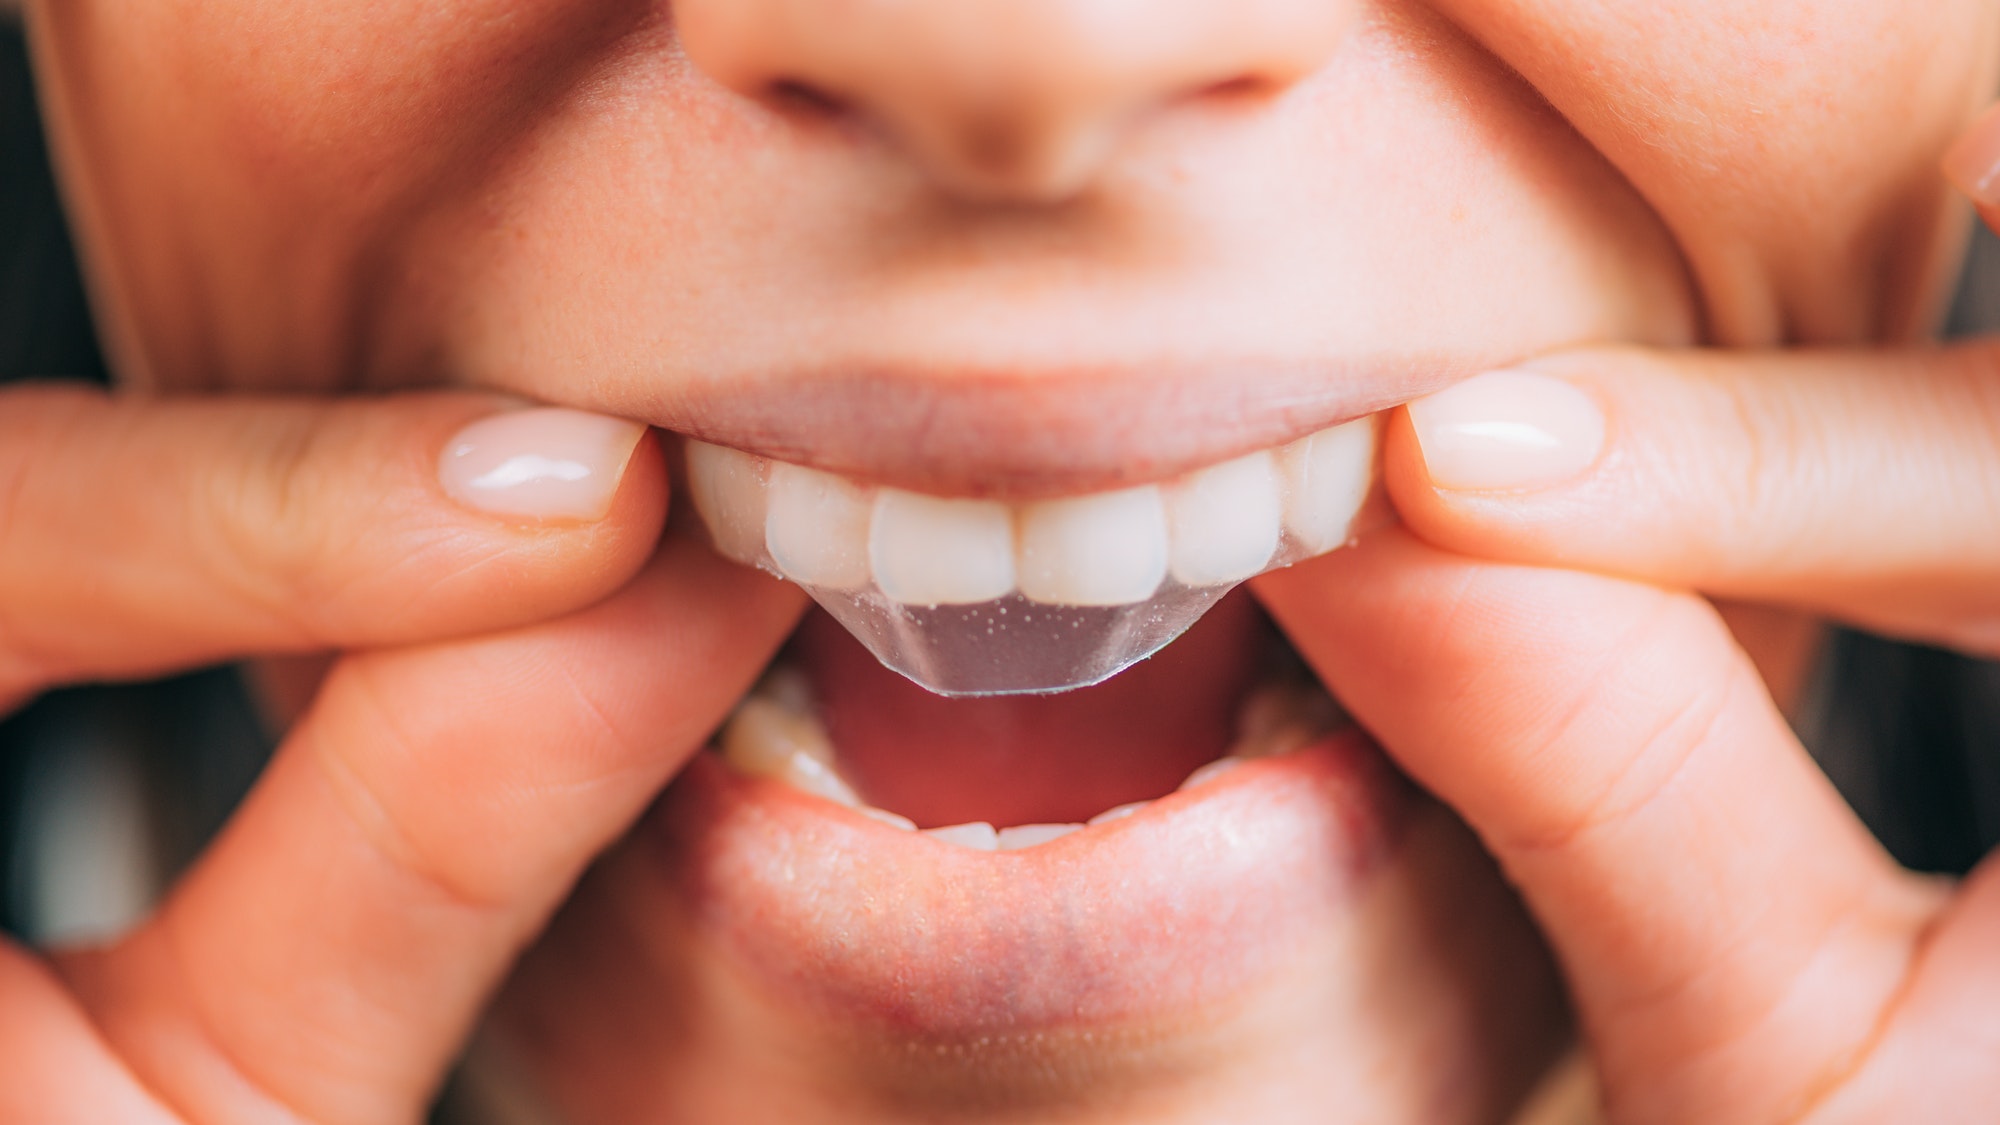 whitestrips or teeth whitening strips